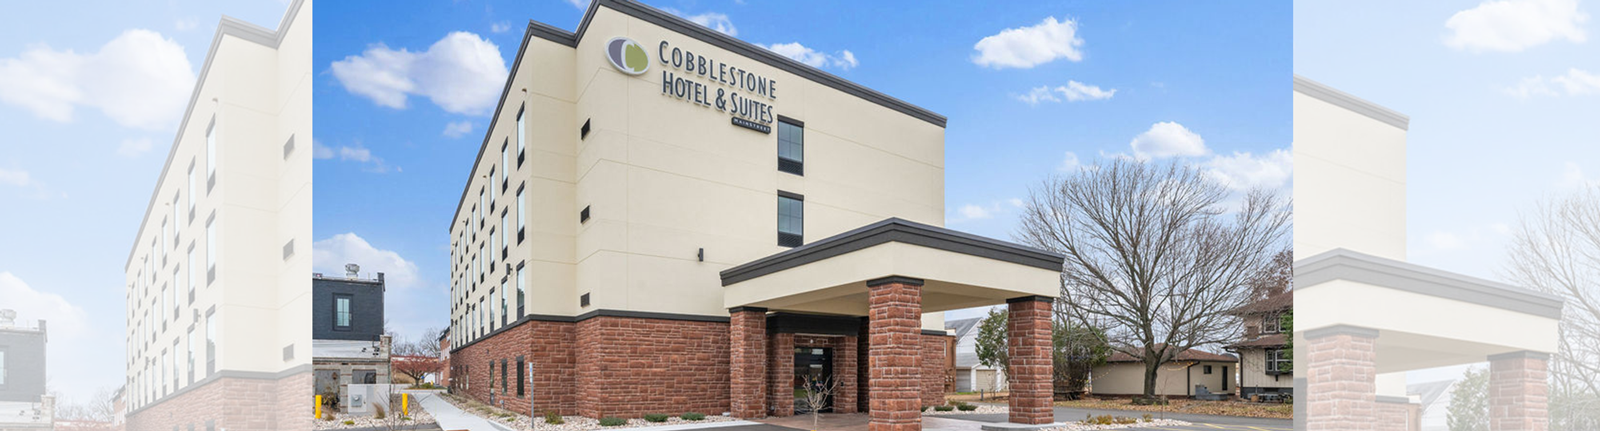 Cobblestone Hotel & Suites Main Street Mosinee